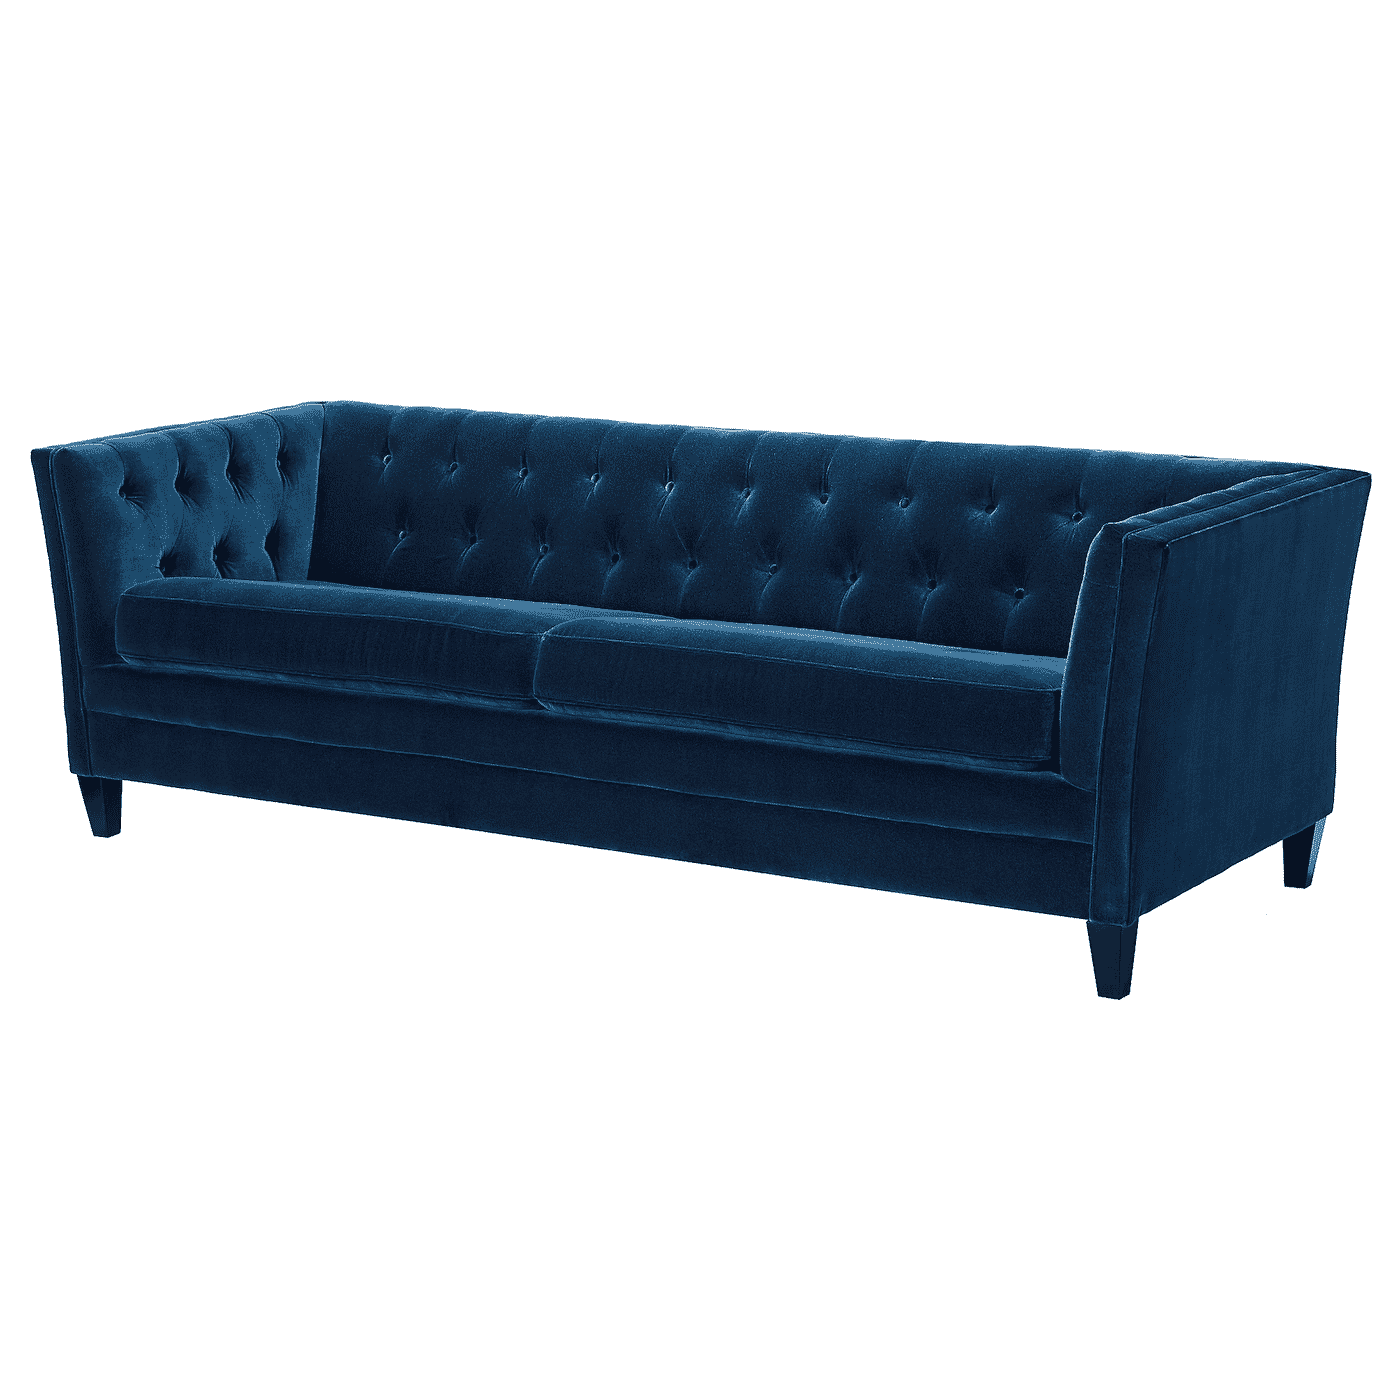 LINDOME Sofa